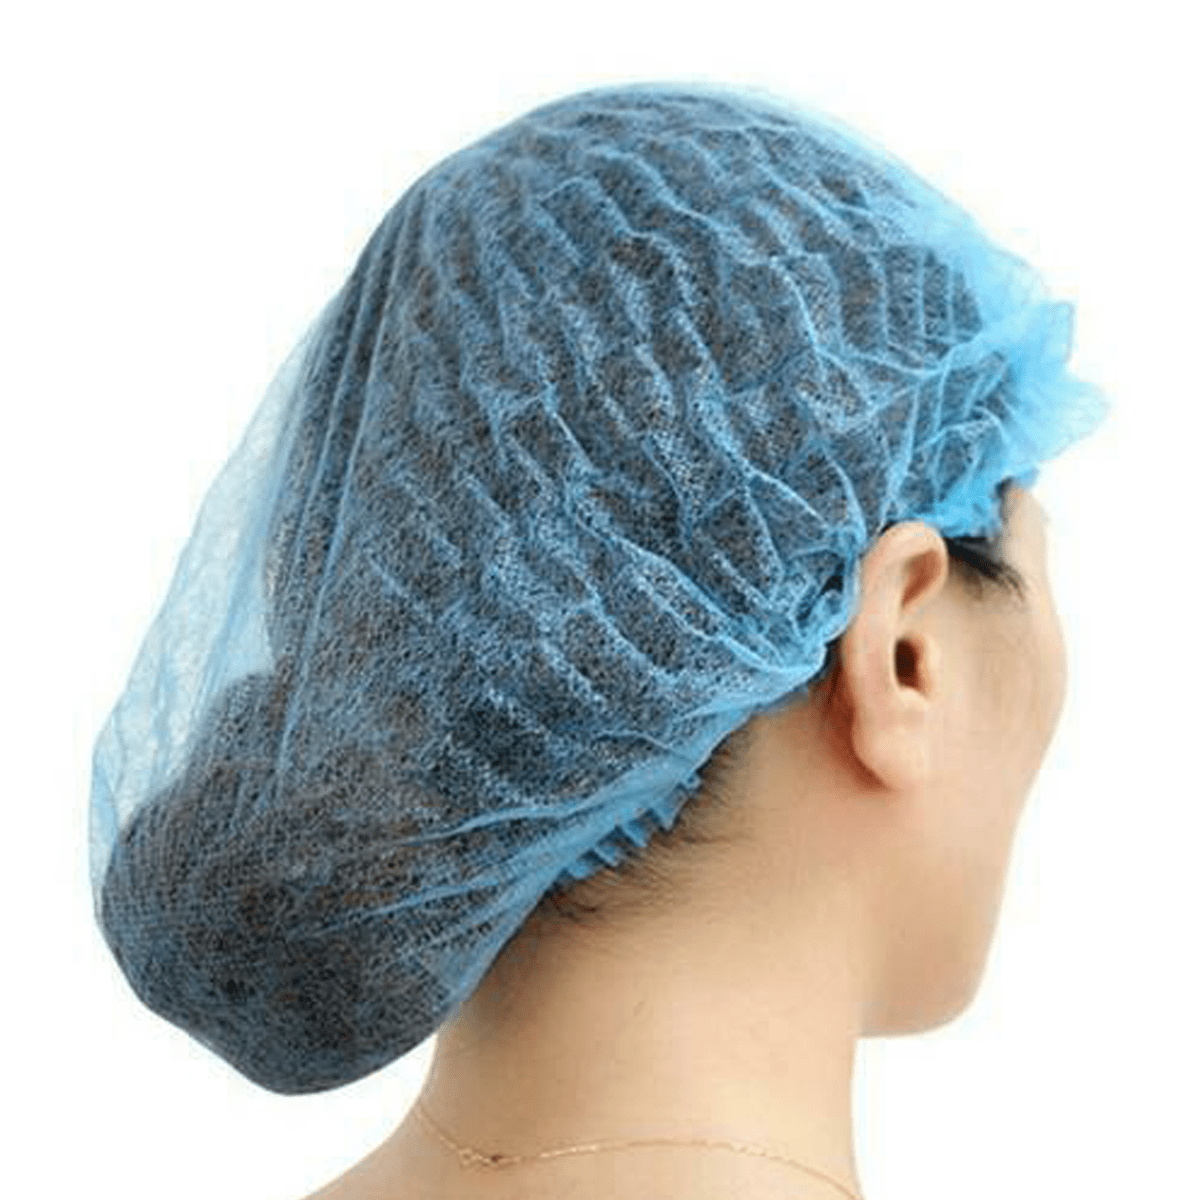 50 x Blue Mesh Hair Mob Cap Nets One Size